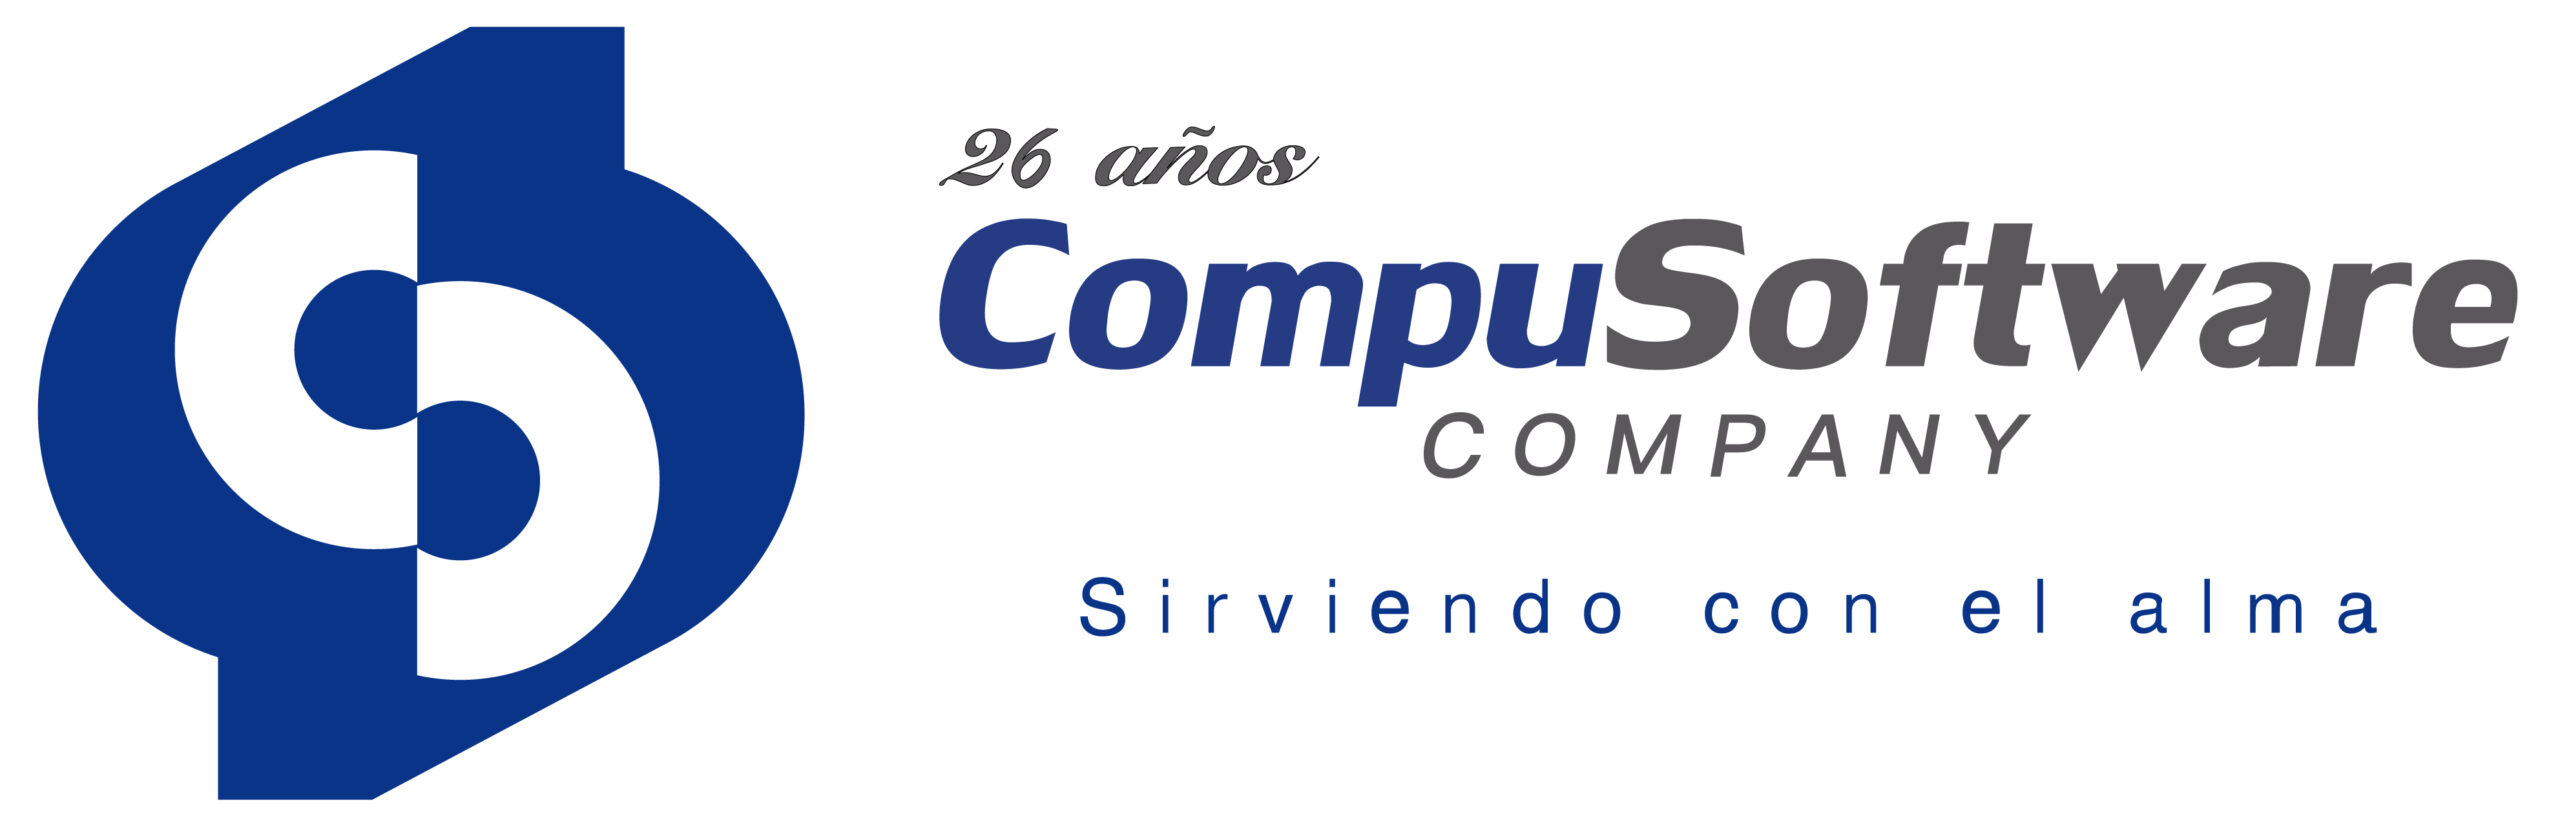 Compusoftware Company